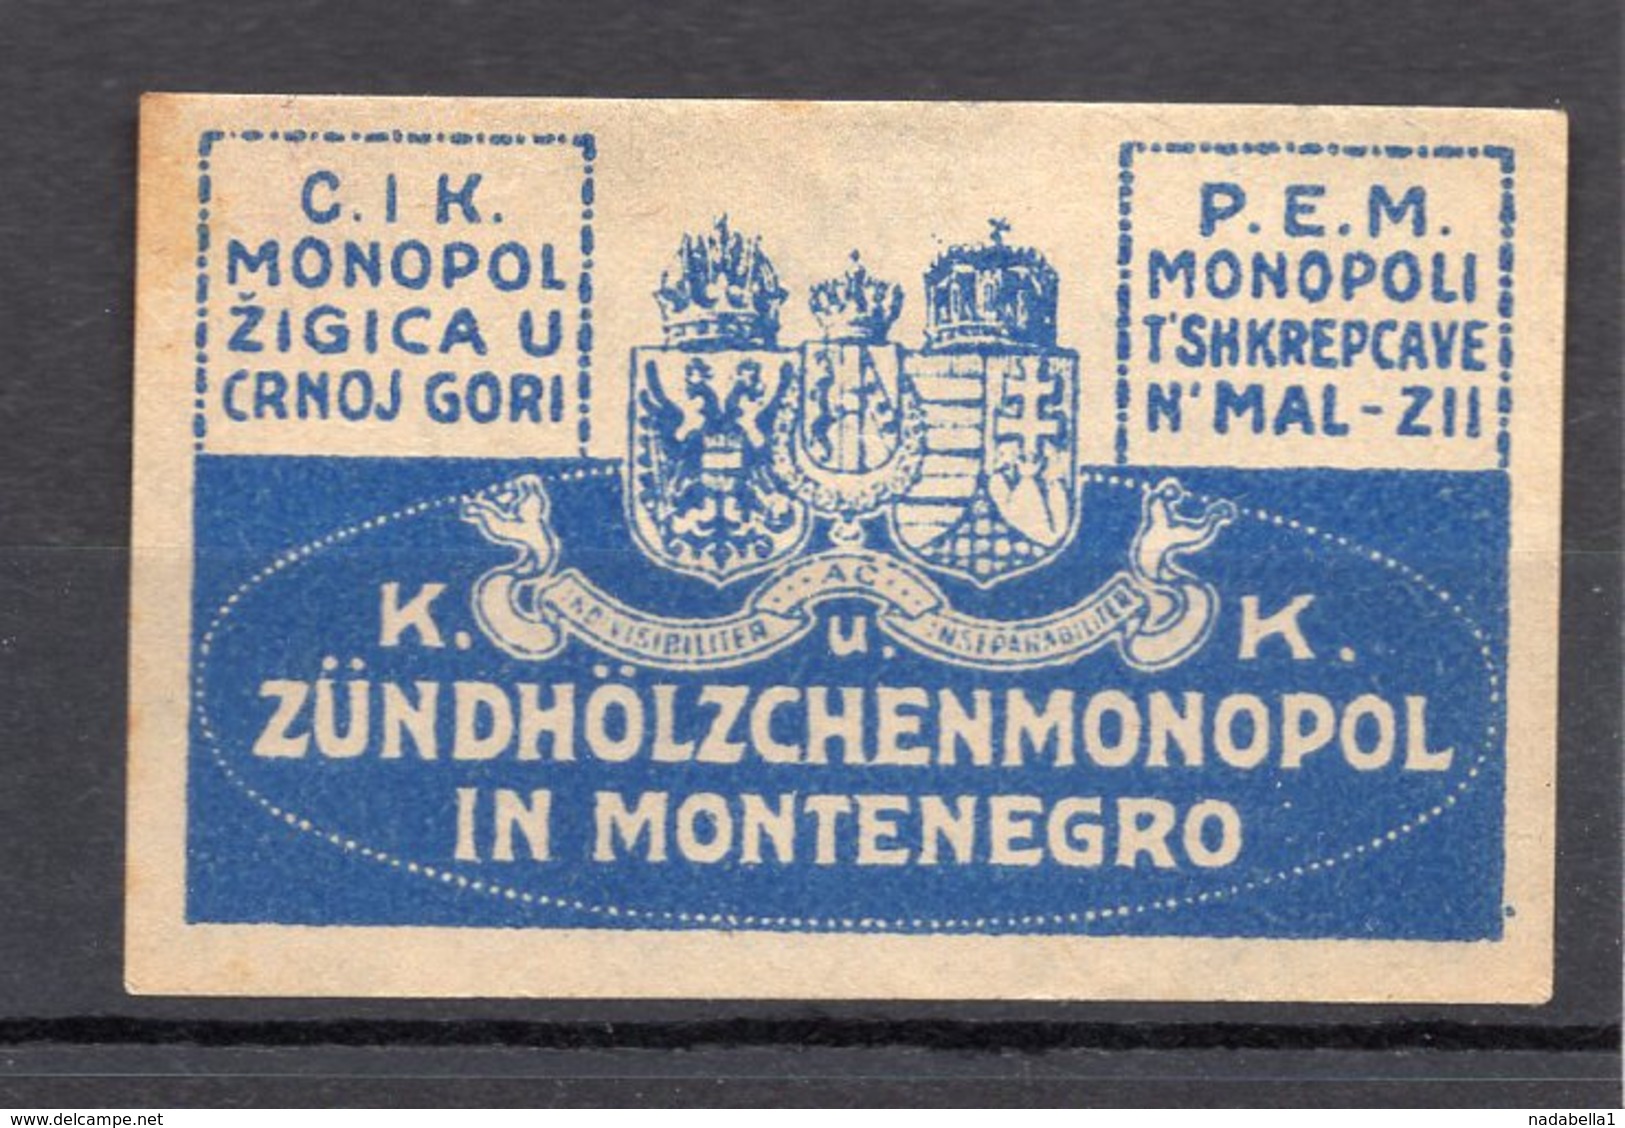 WWI AUSTRIAN OCCUPATION OF MONTENEGRO, MATCHBOX LABEL,K.U.K. MATCH BOX  MONOPOL IN MONTENEGRO - Matchbox Labels